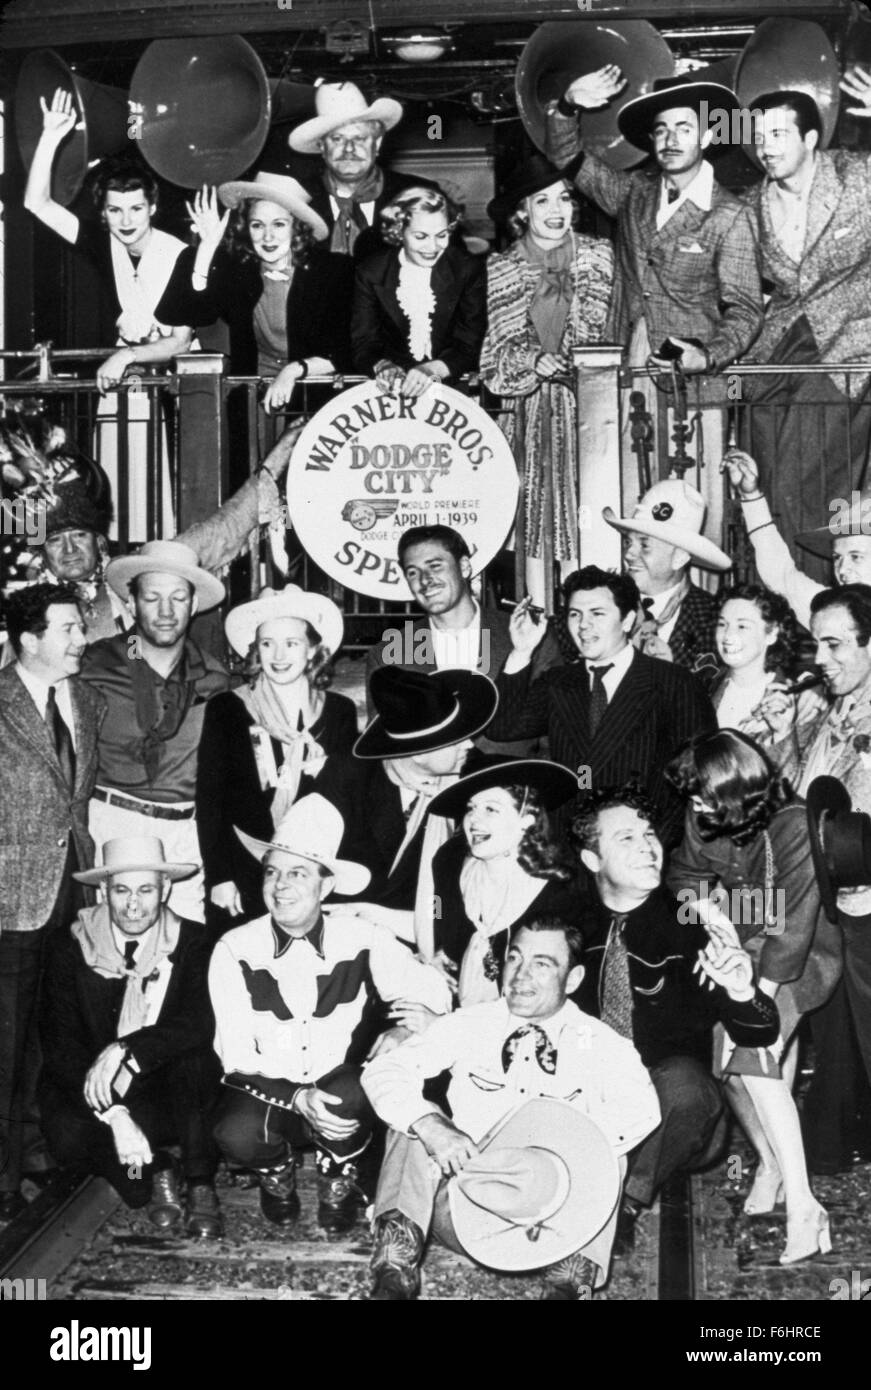 1939, Film Title: DODGE CITY, Director: MICHAEL CURTIZ, Studio: WARNER, Pictured: MICHAEL CURTIZ, DODGE CITY, ENSEMBLE, ERROL FLYNN. (Credit Image: SNAP) Stock Photo